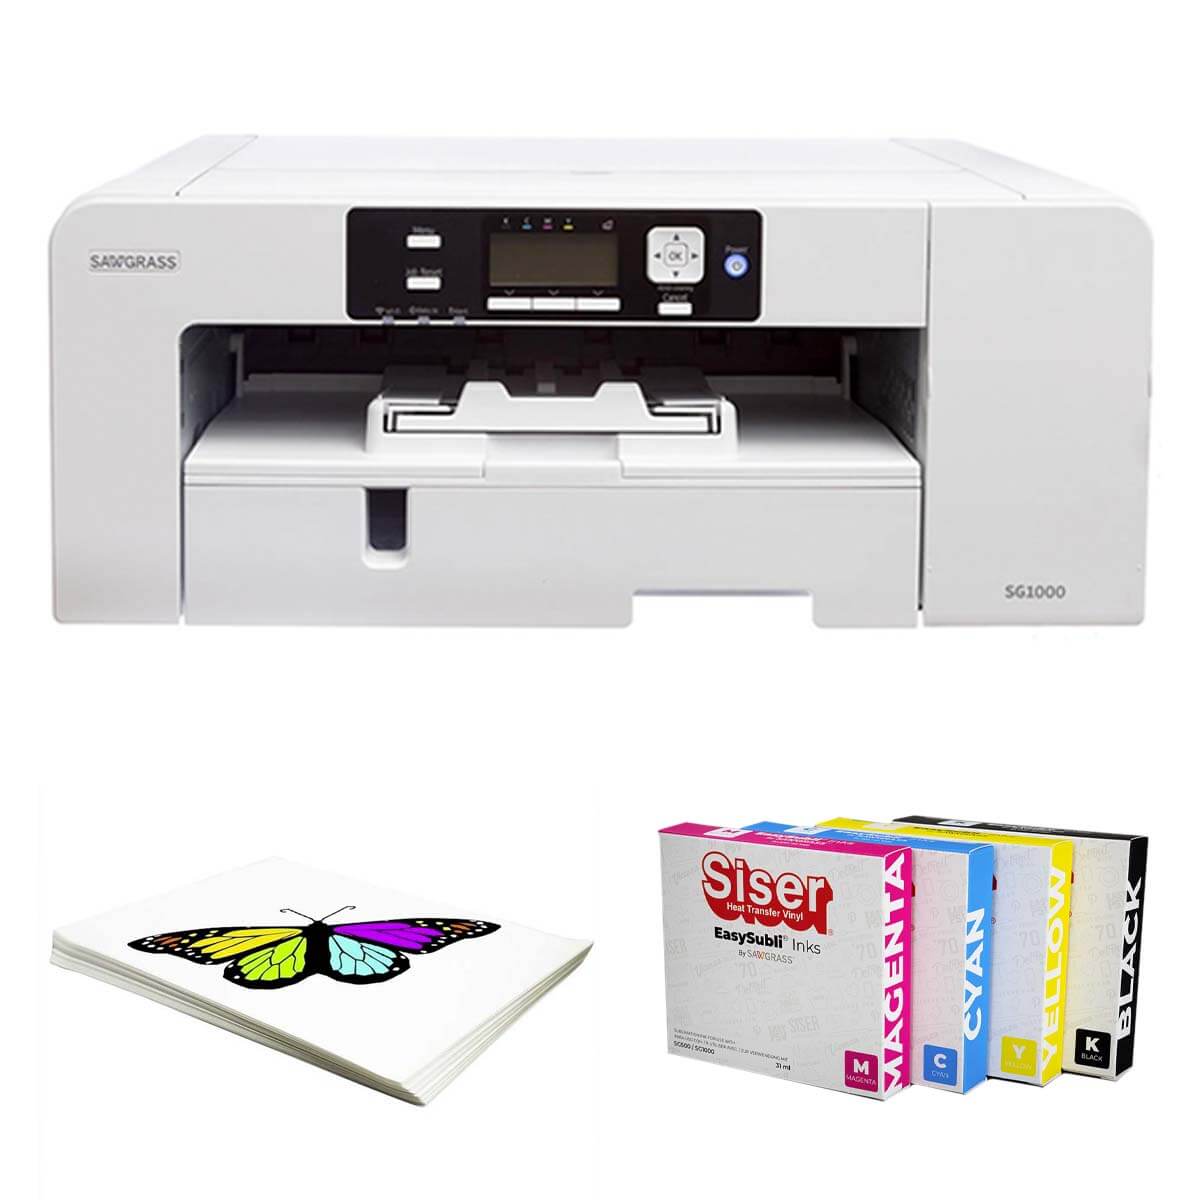 Siser EasySubli Sublimation Inks for the Sawgrass SG400 AND SG800 Printers  - Bundle